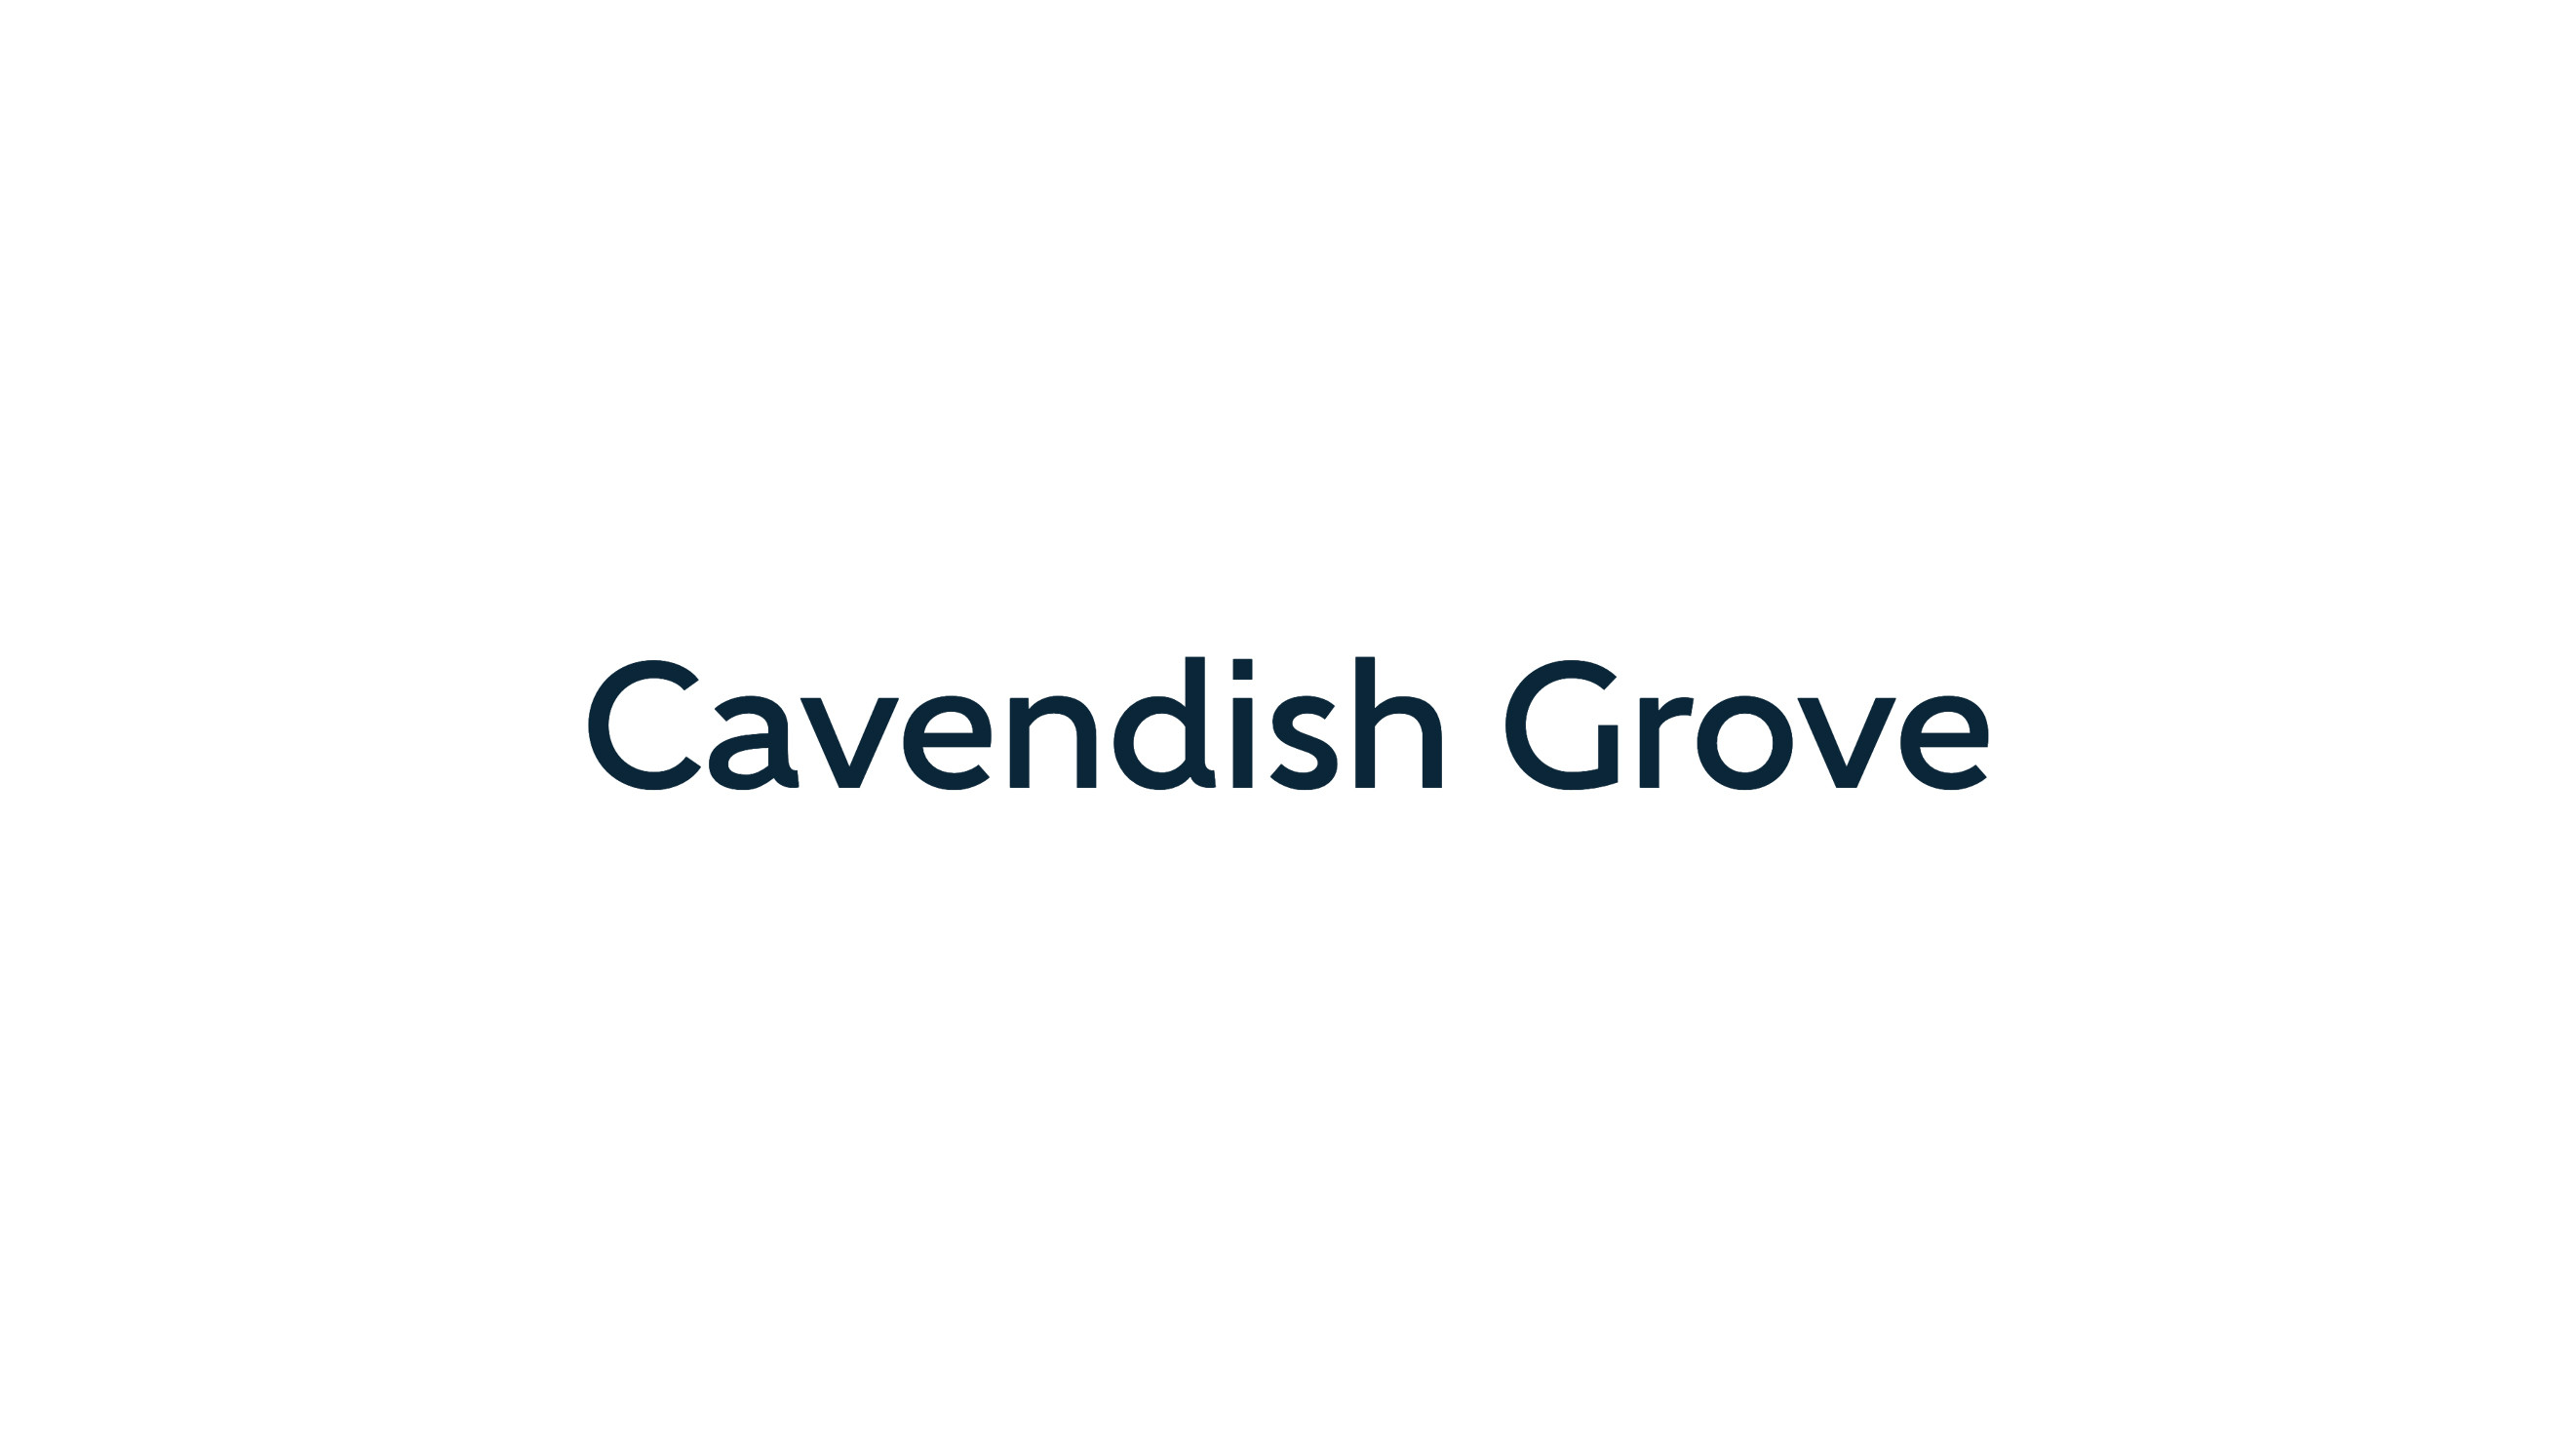 Cavendish Grove development in Raynes Park, London SW20